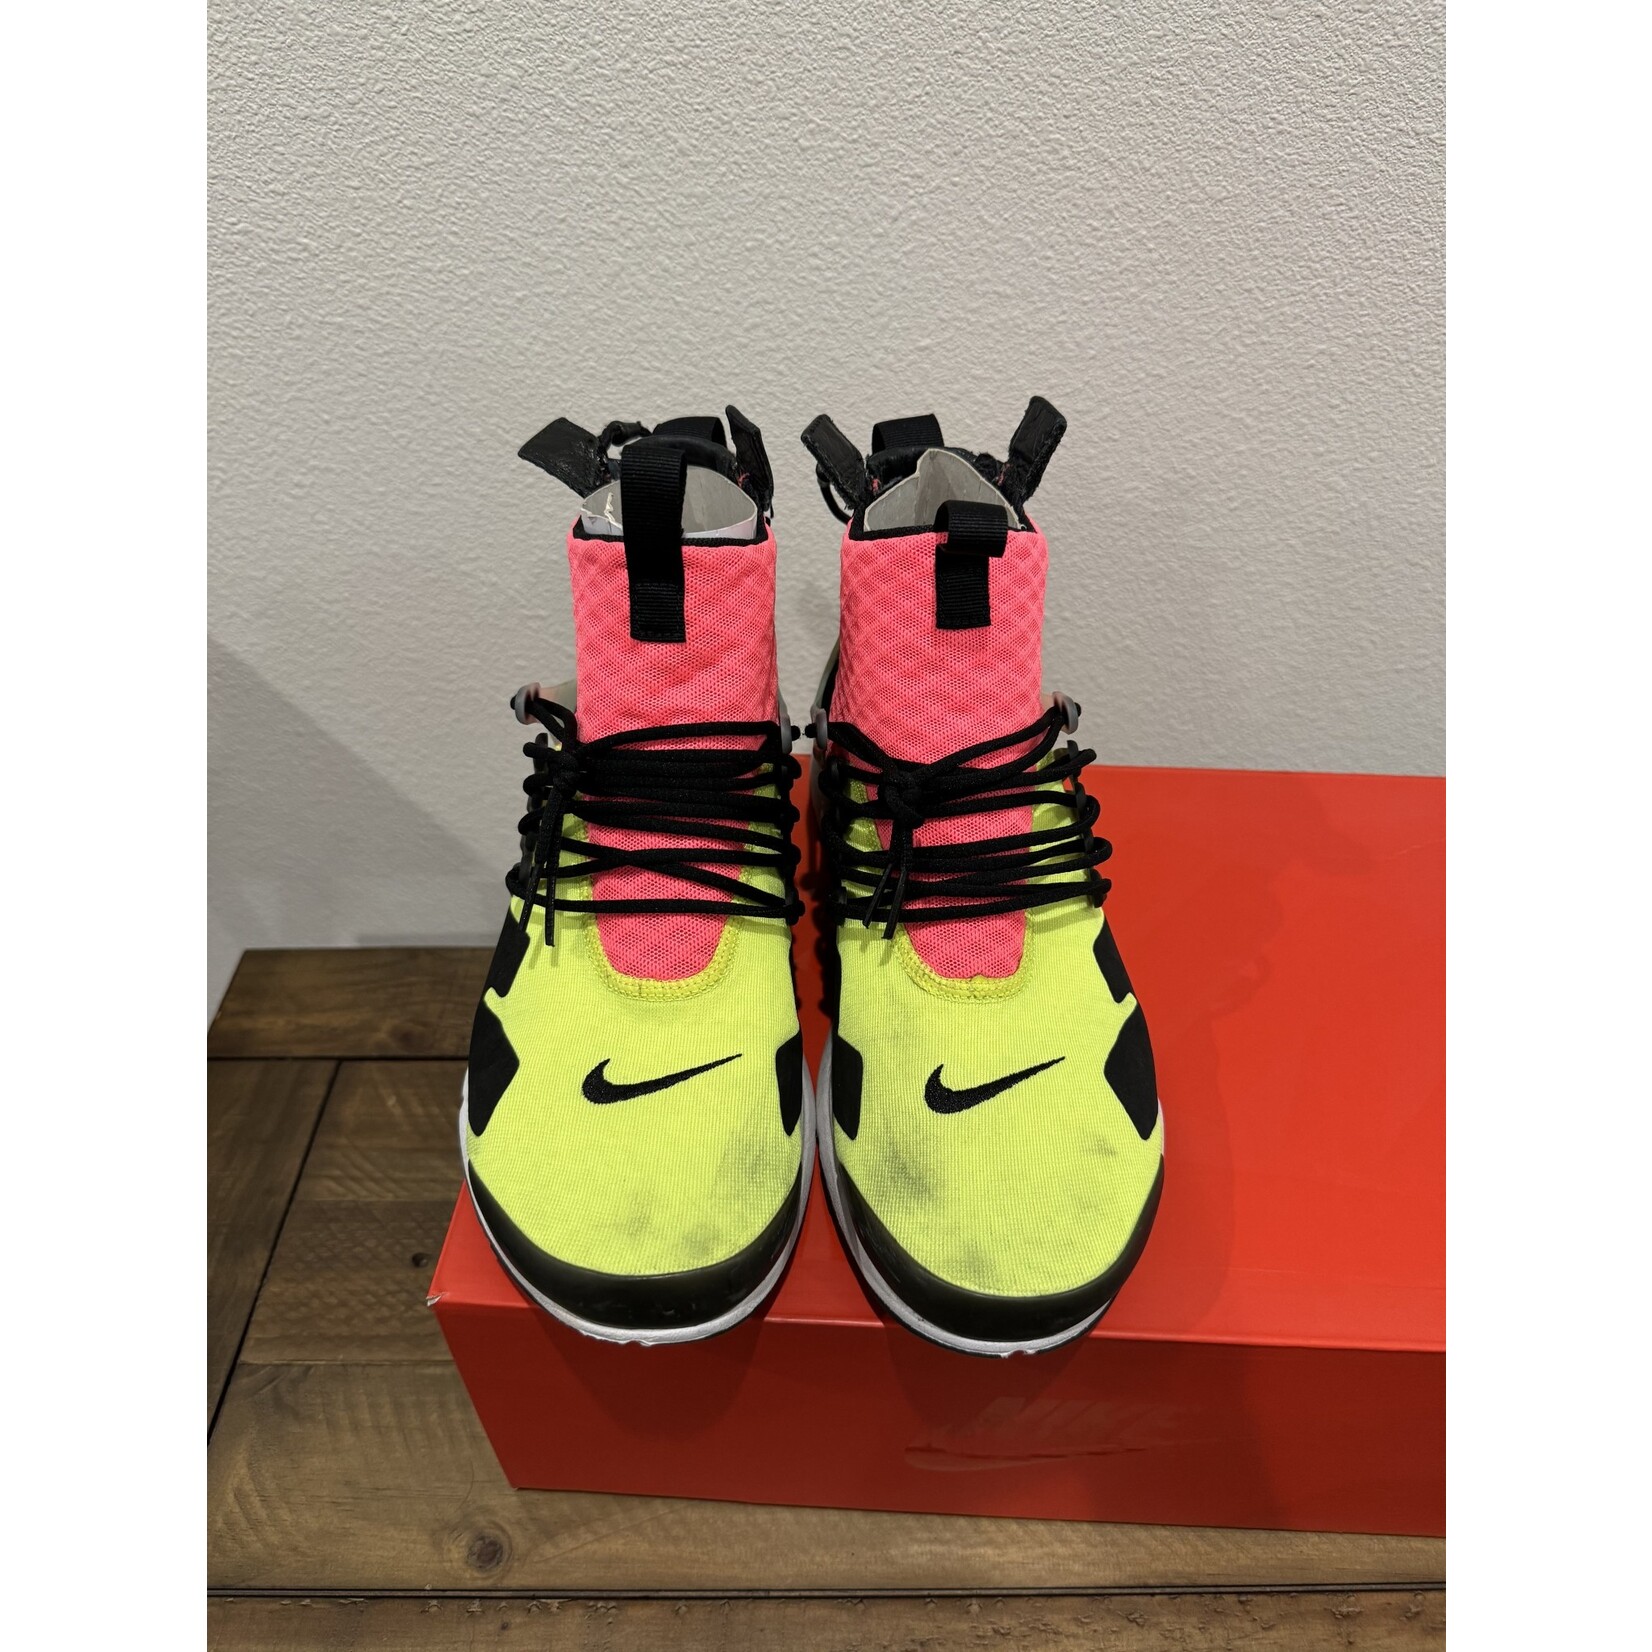 Nike Nike Air Presto Acronym Volt Size XS 8 - 9, PREOWNED